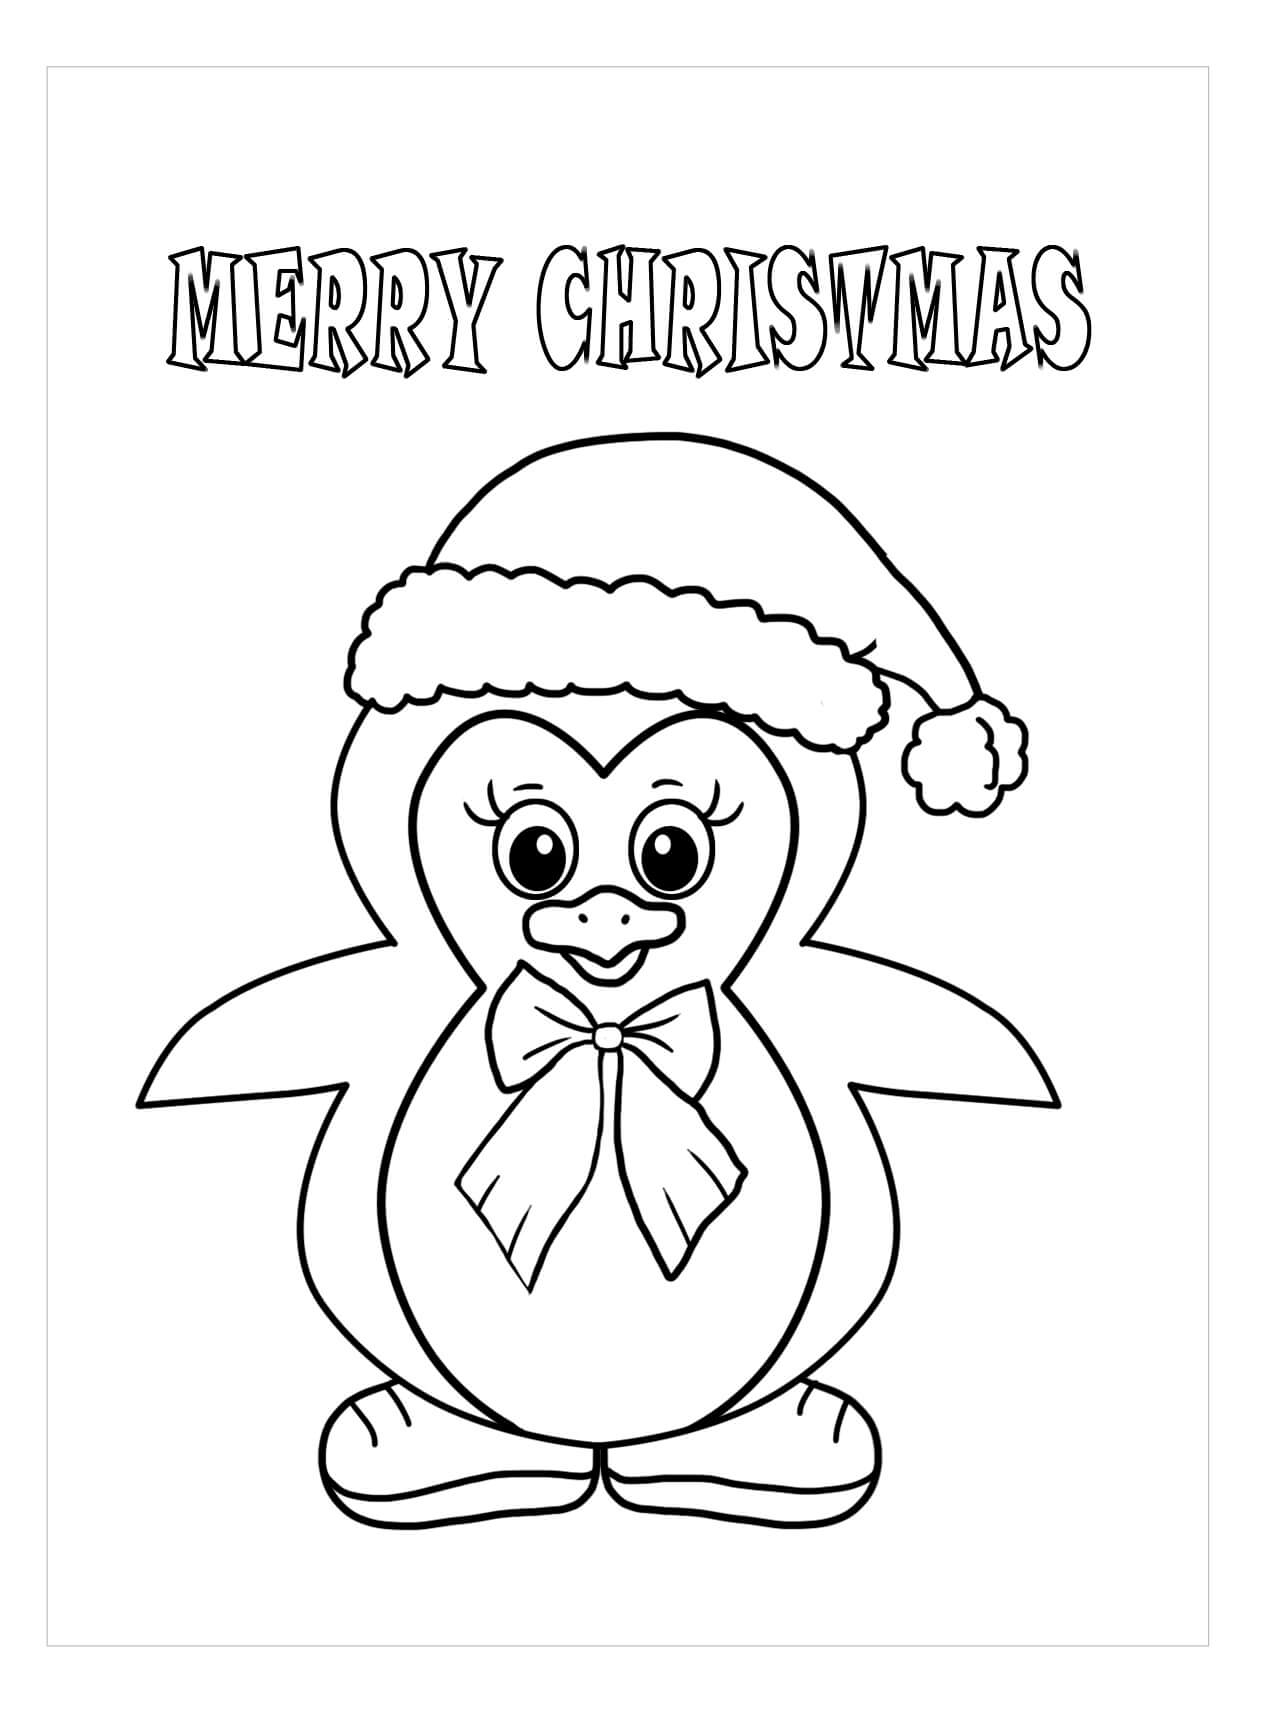 Pinguim em Feliz Natal para colorir